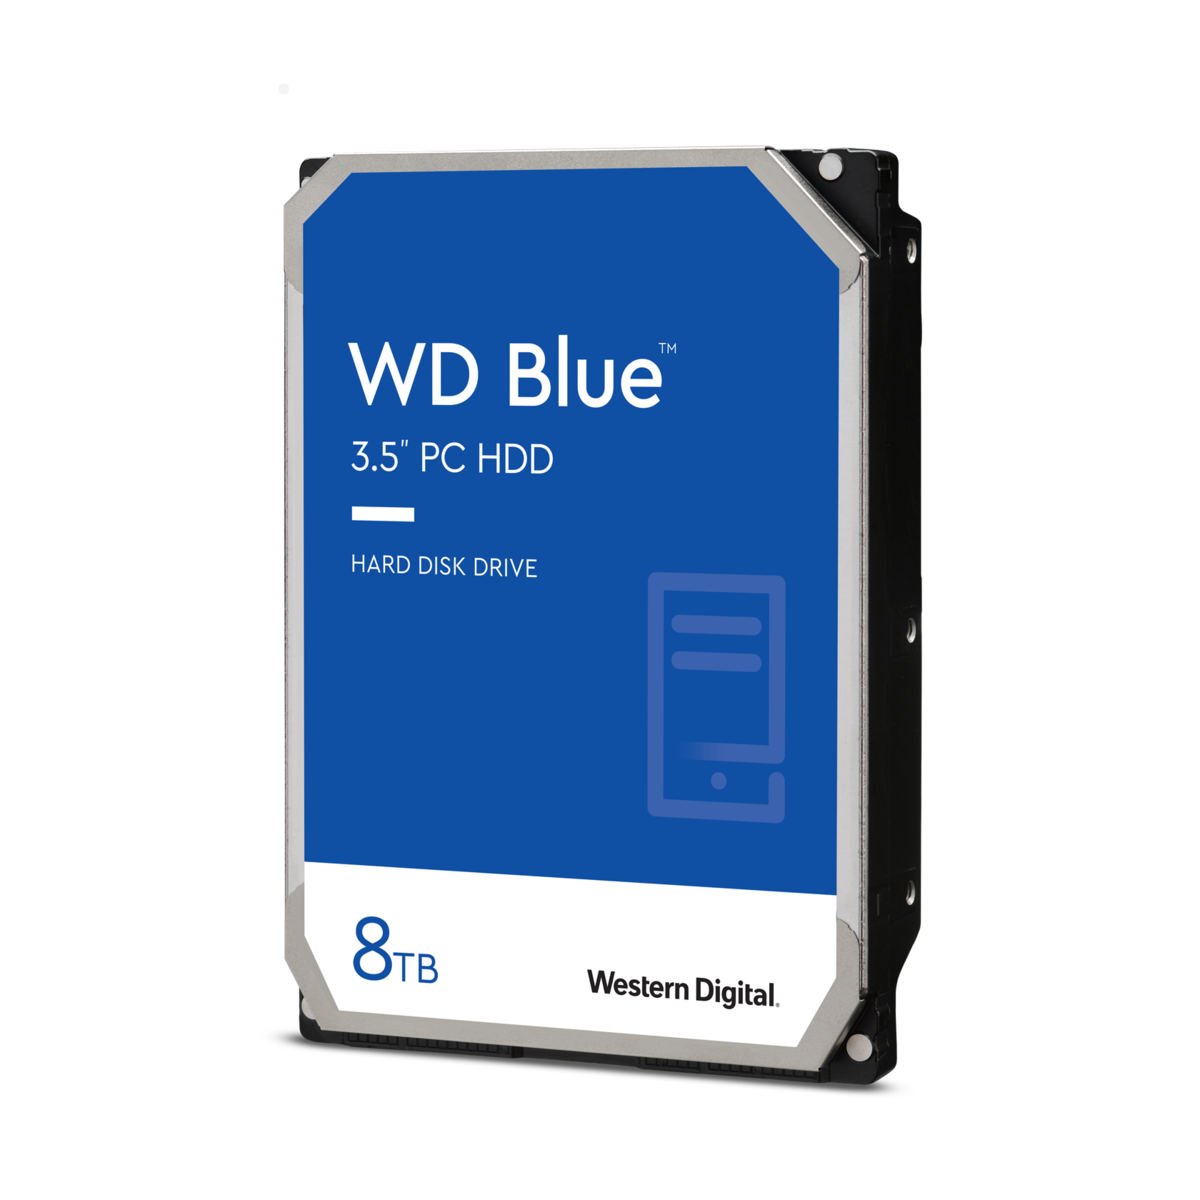 8TB WD Blue Internal Hard Disk Drive WD80EAAZ $110